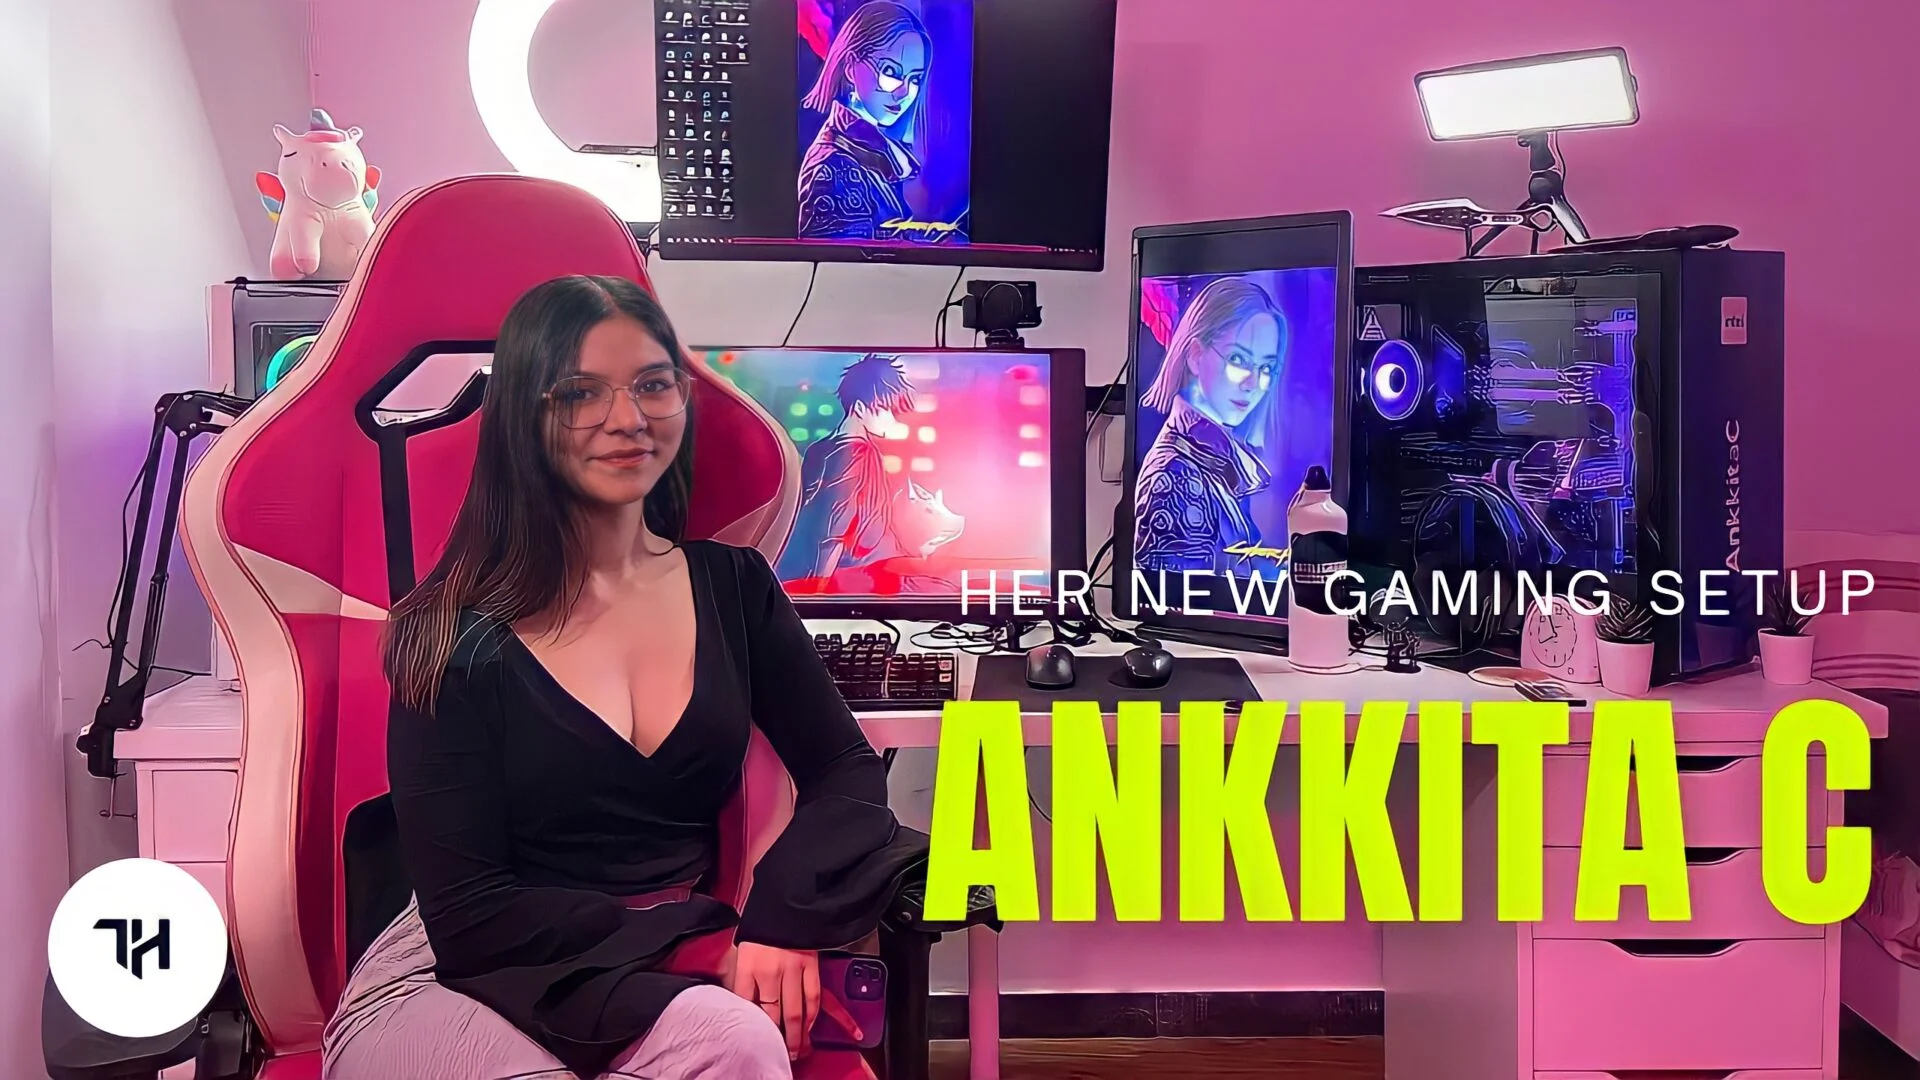 Ankita C Room Tour and Gaming Setup